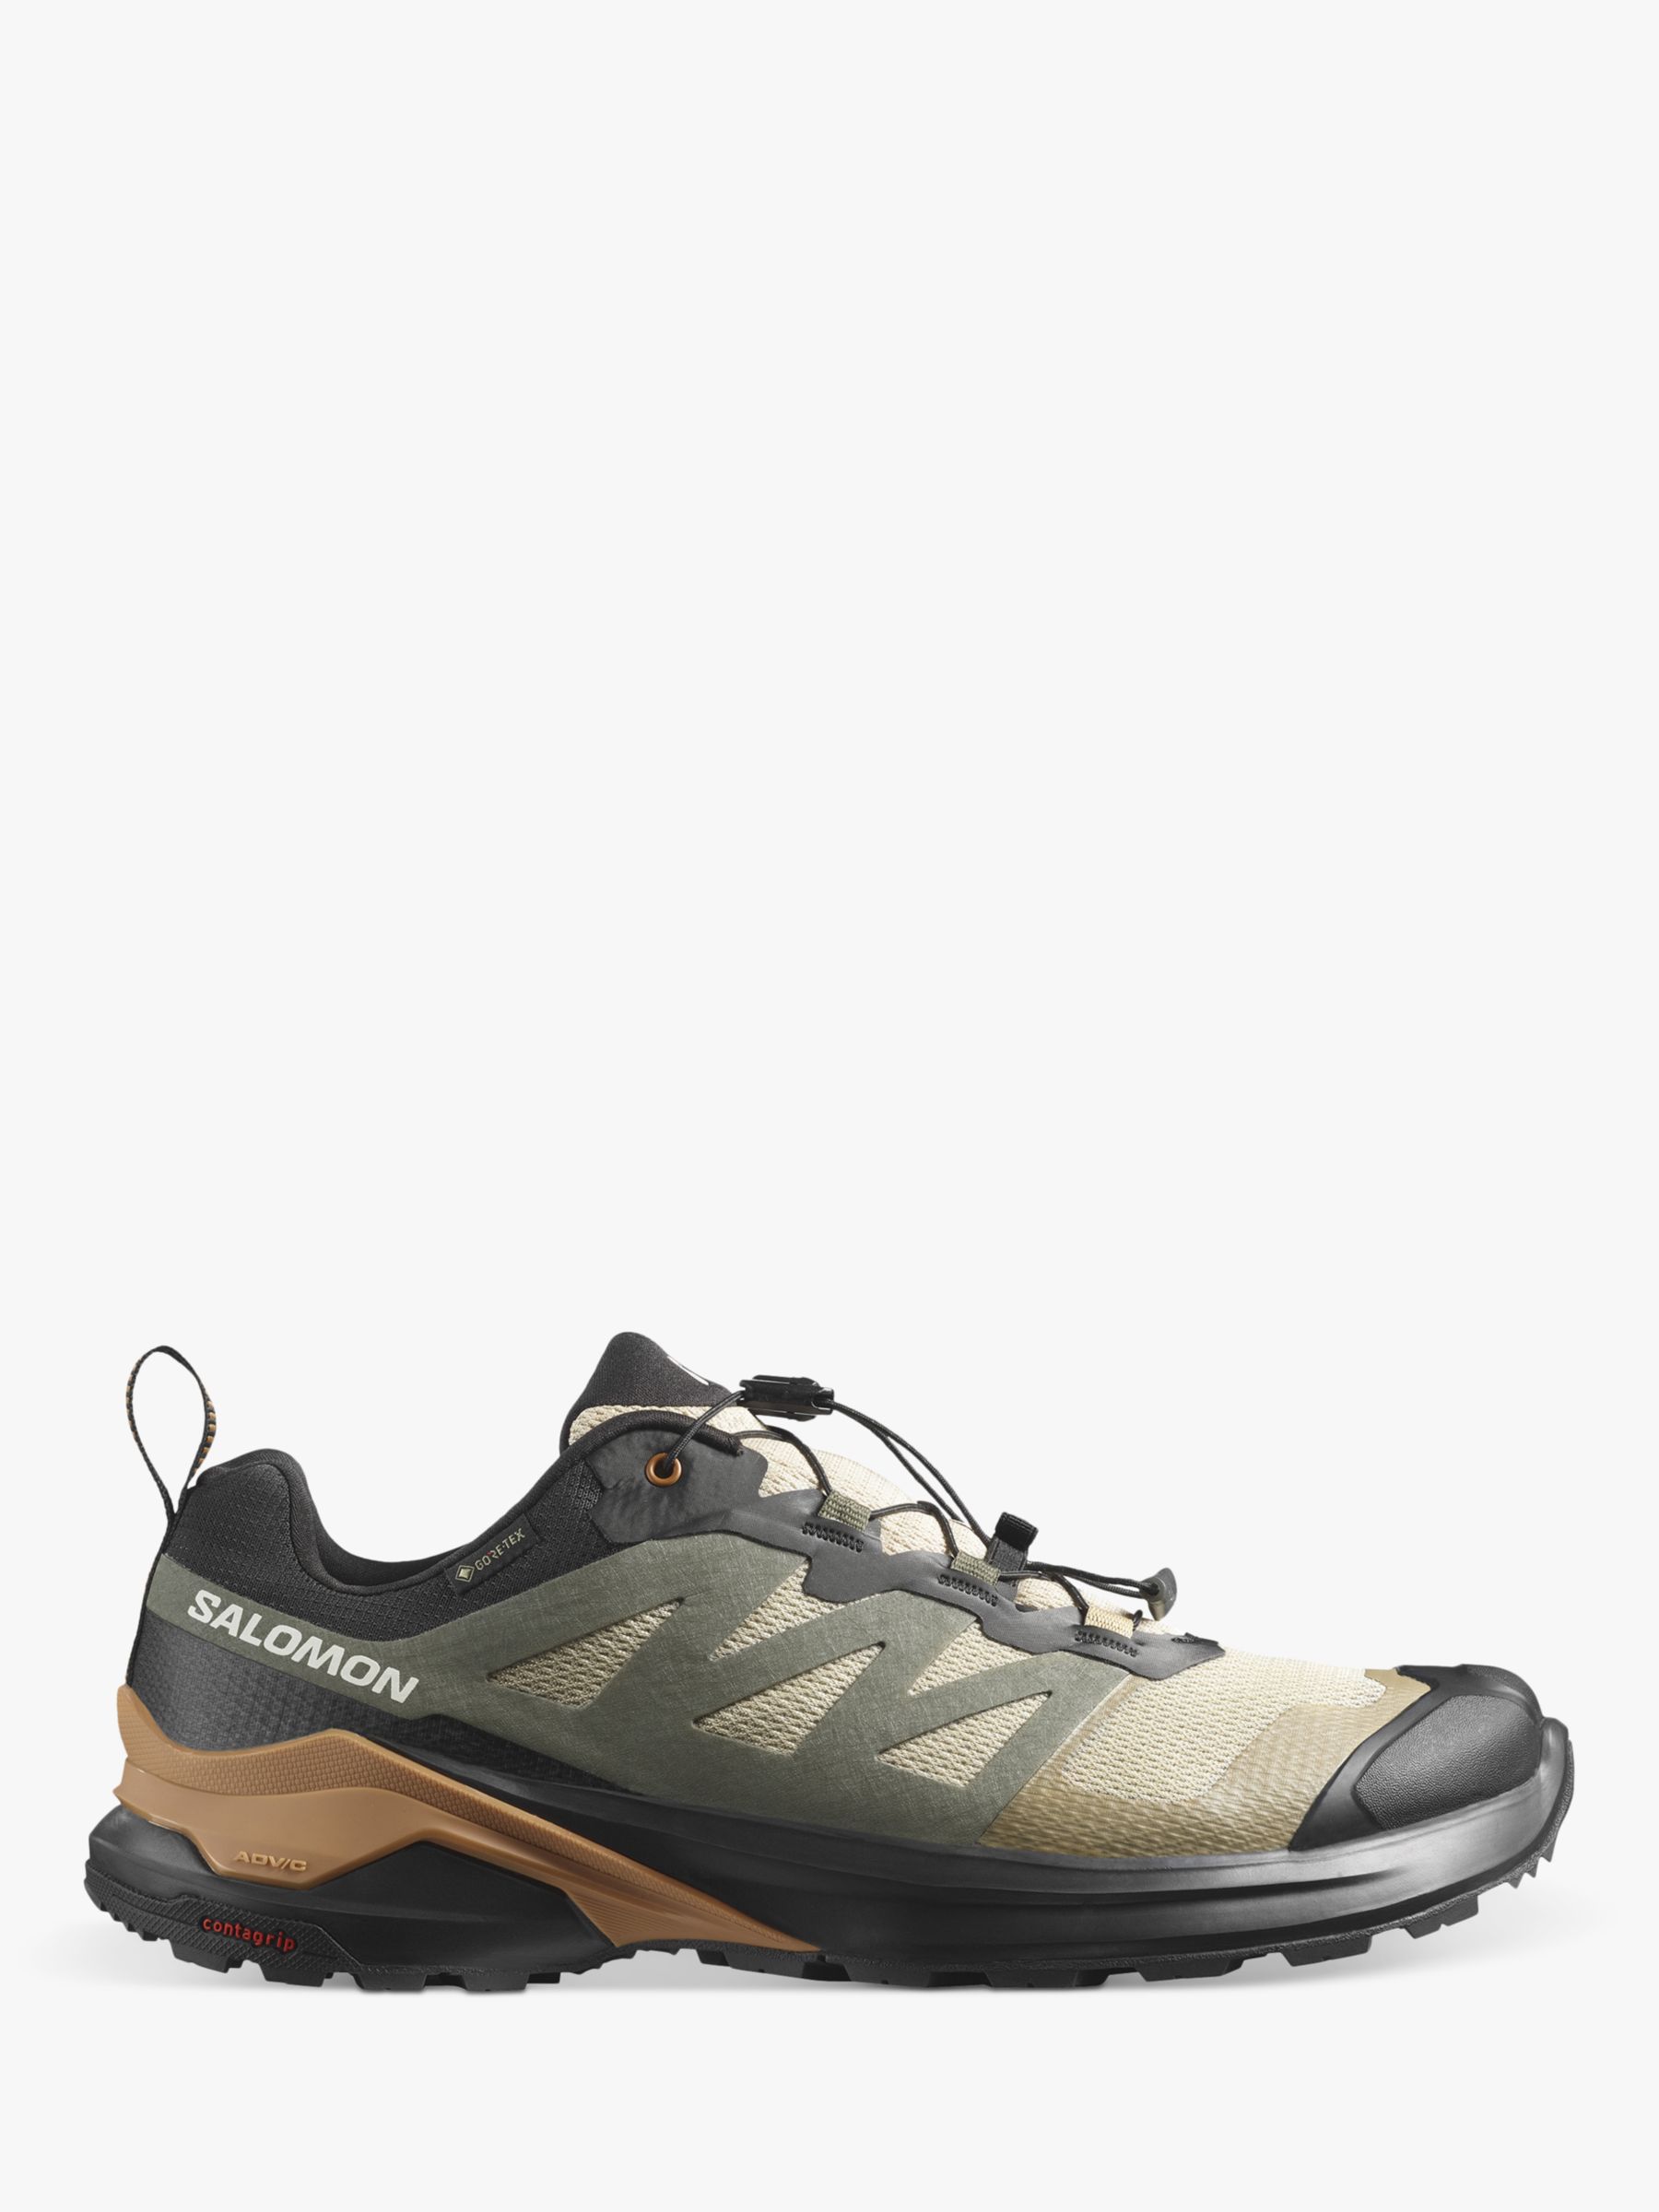 Salomon X-Adventure Men's Gore-Tex Waterproof Shoes, Brown/Multi, 8